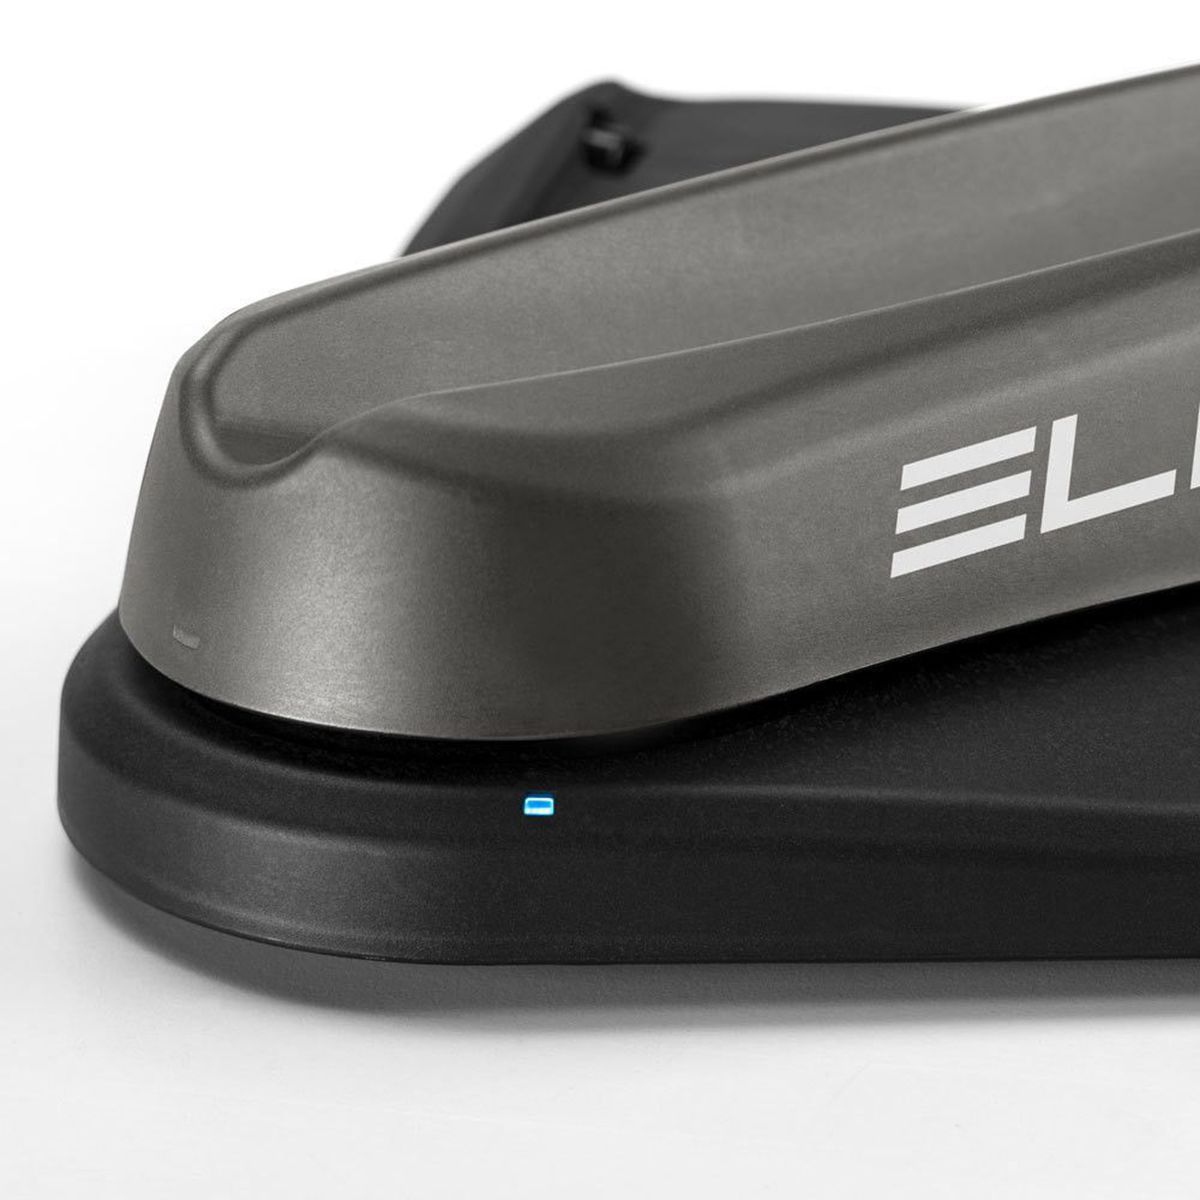 Elite-Sterzo-Smart-steering-device-home-trainer-Zwift-compatible-3.jpg